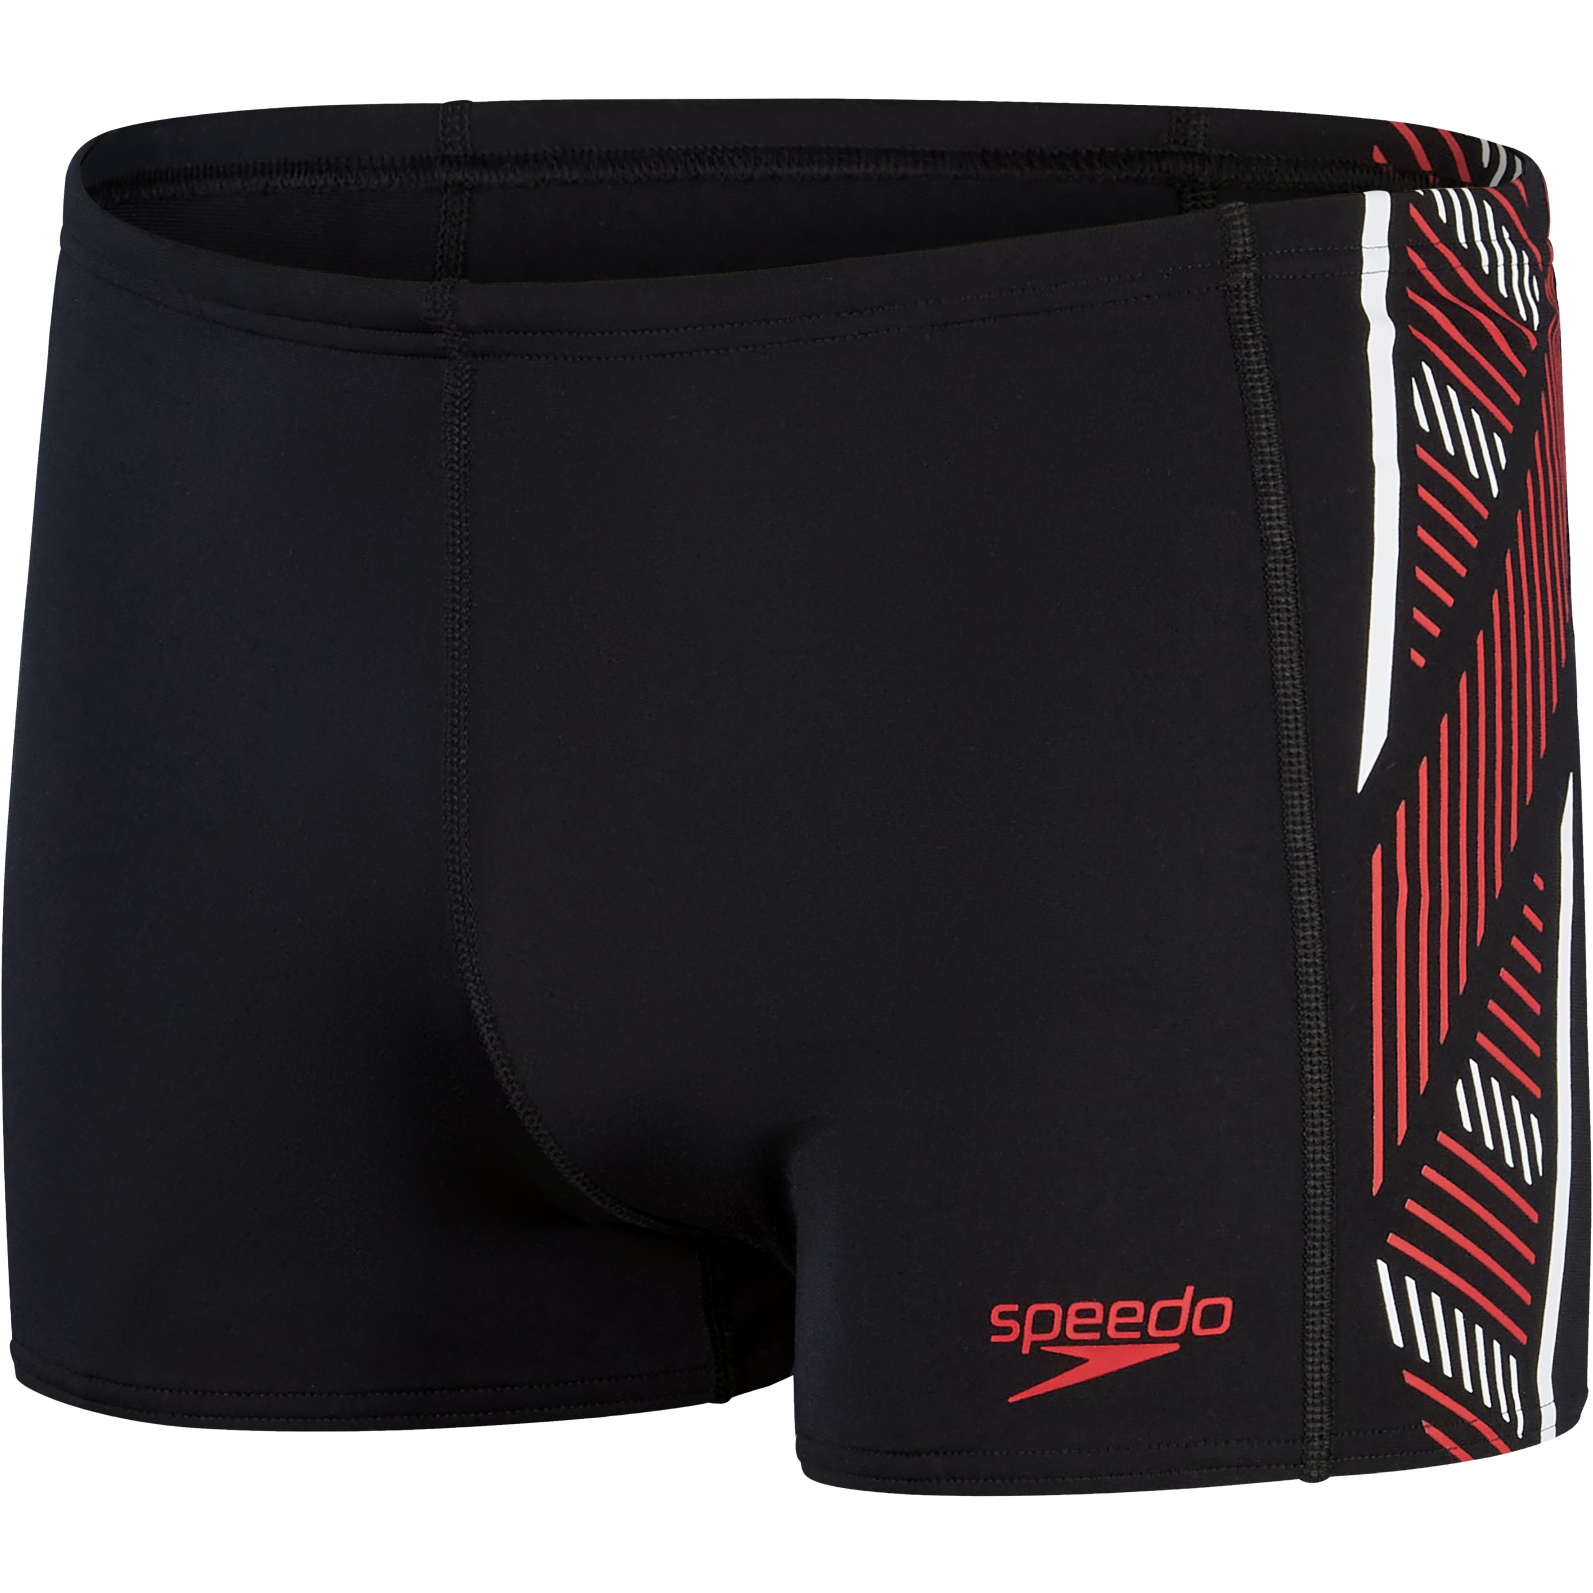 Picture of Speedo Tech Panel Aquashort - black/fed red/white